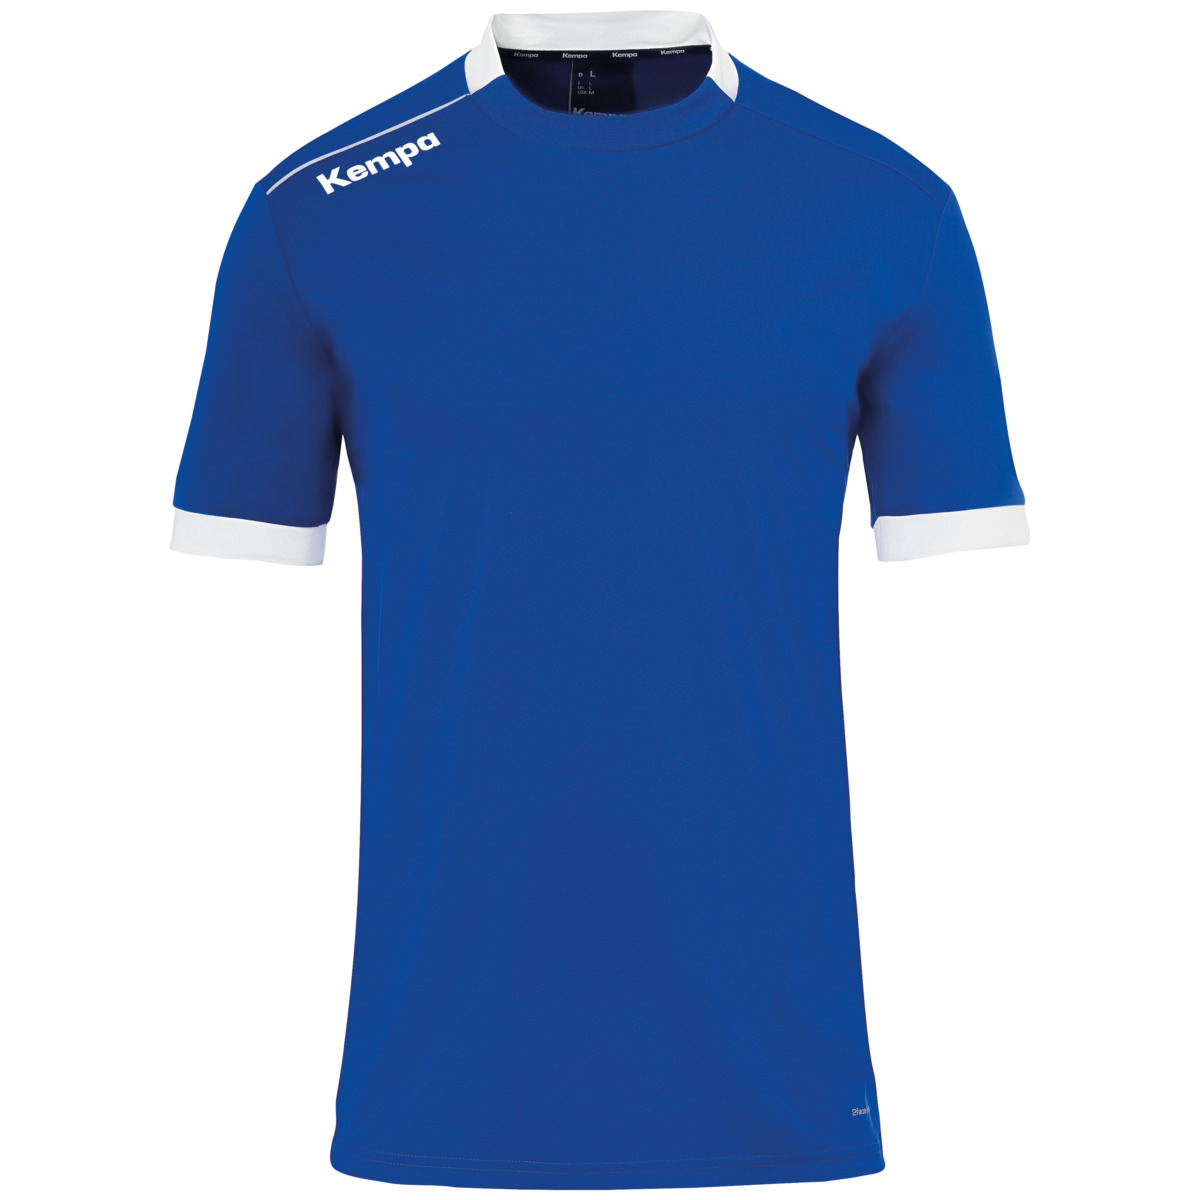 Camiseta Kempa Player - azul-blanco - 